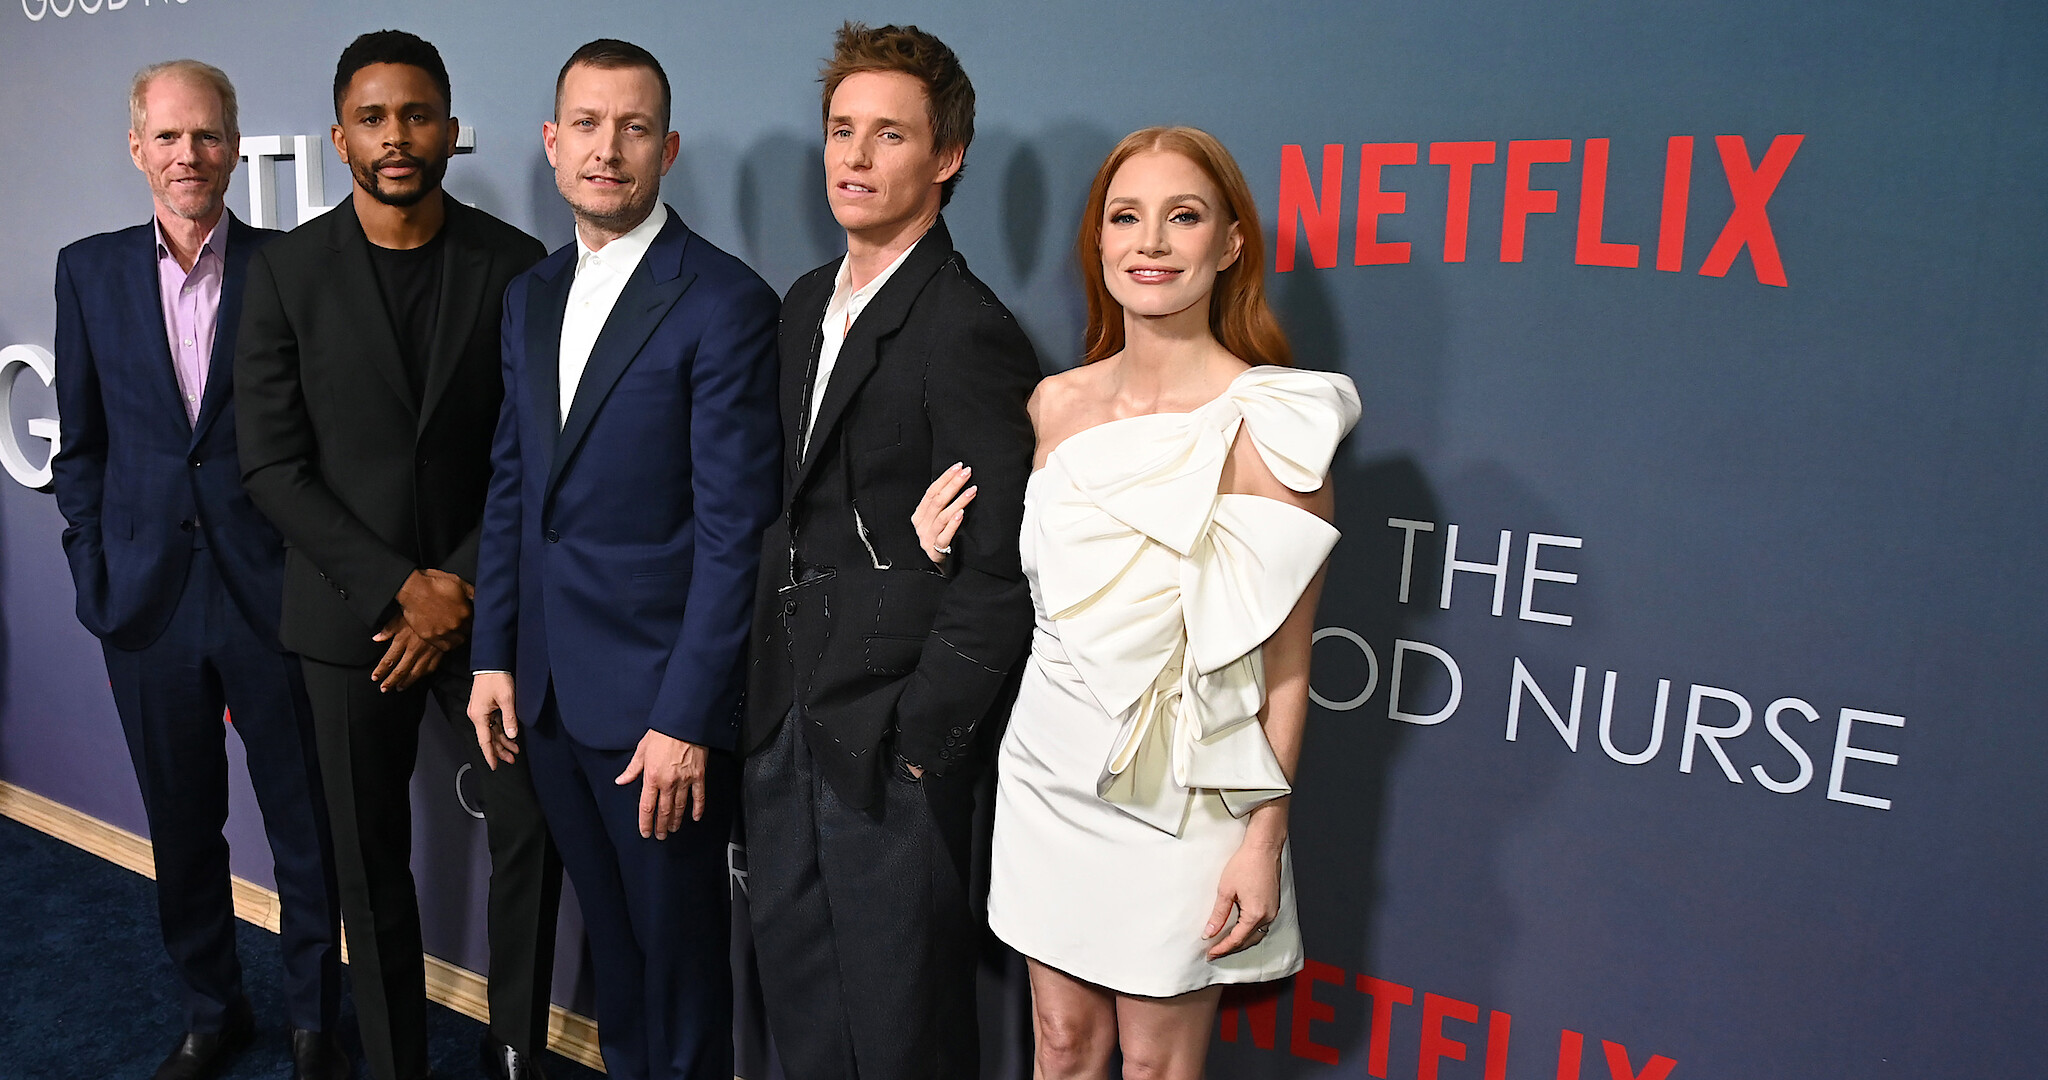 May December Cast, Release Date, Trailer & Plot of Natalie Portman,  Julianne Moore Movie - Netflix Tudum